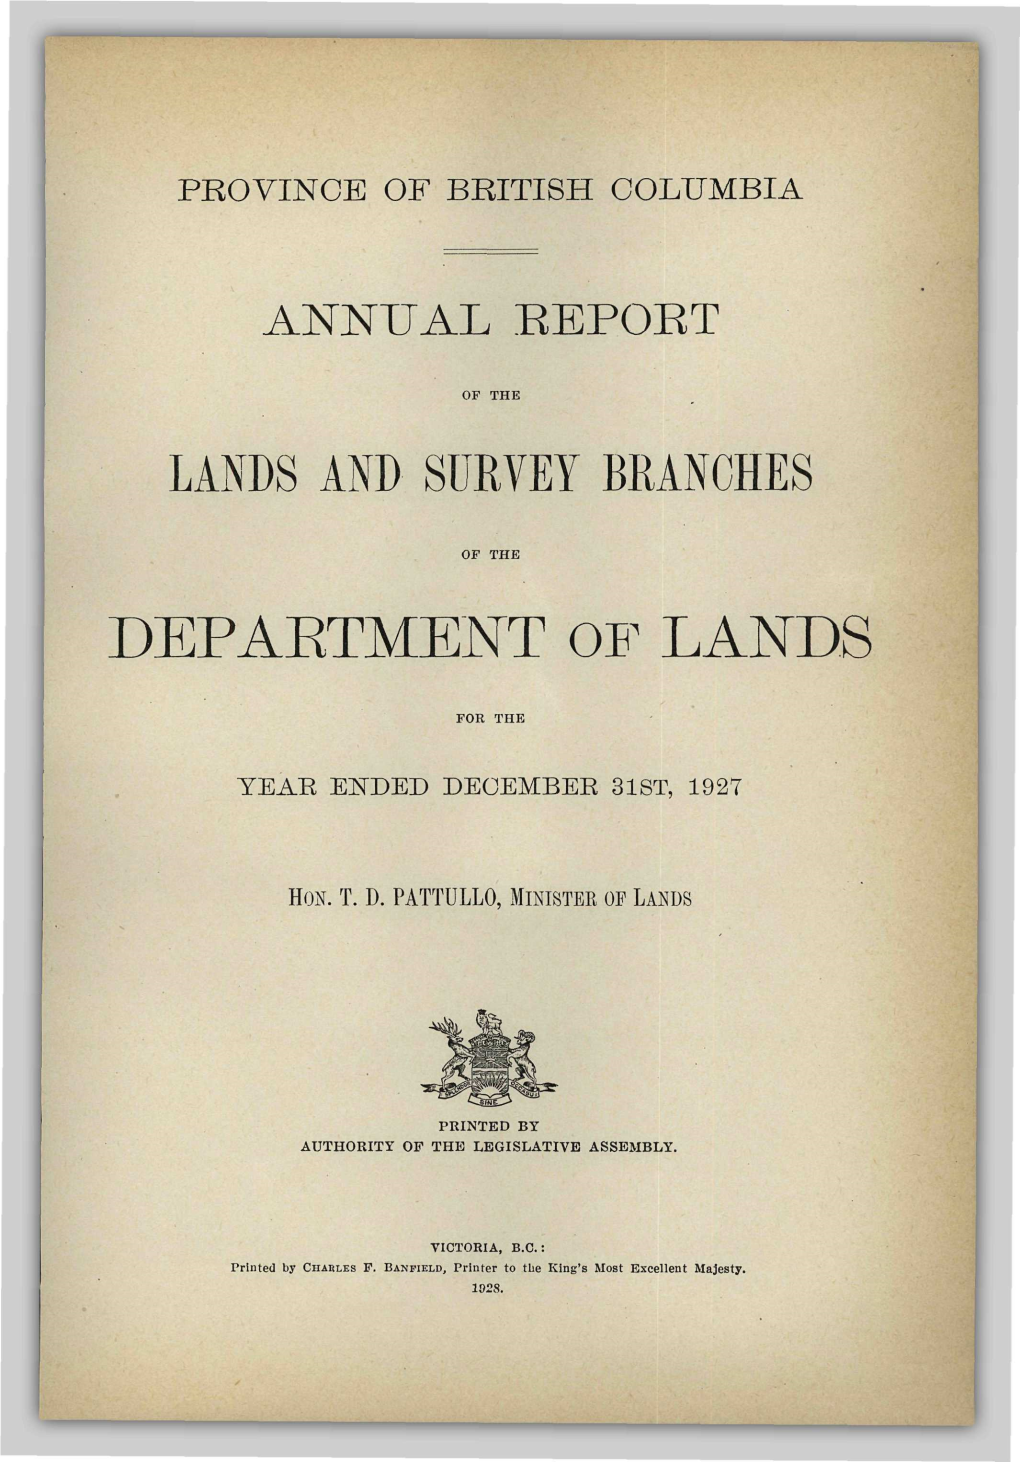 Department of Lands